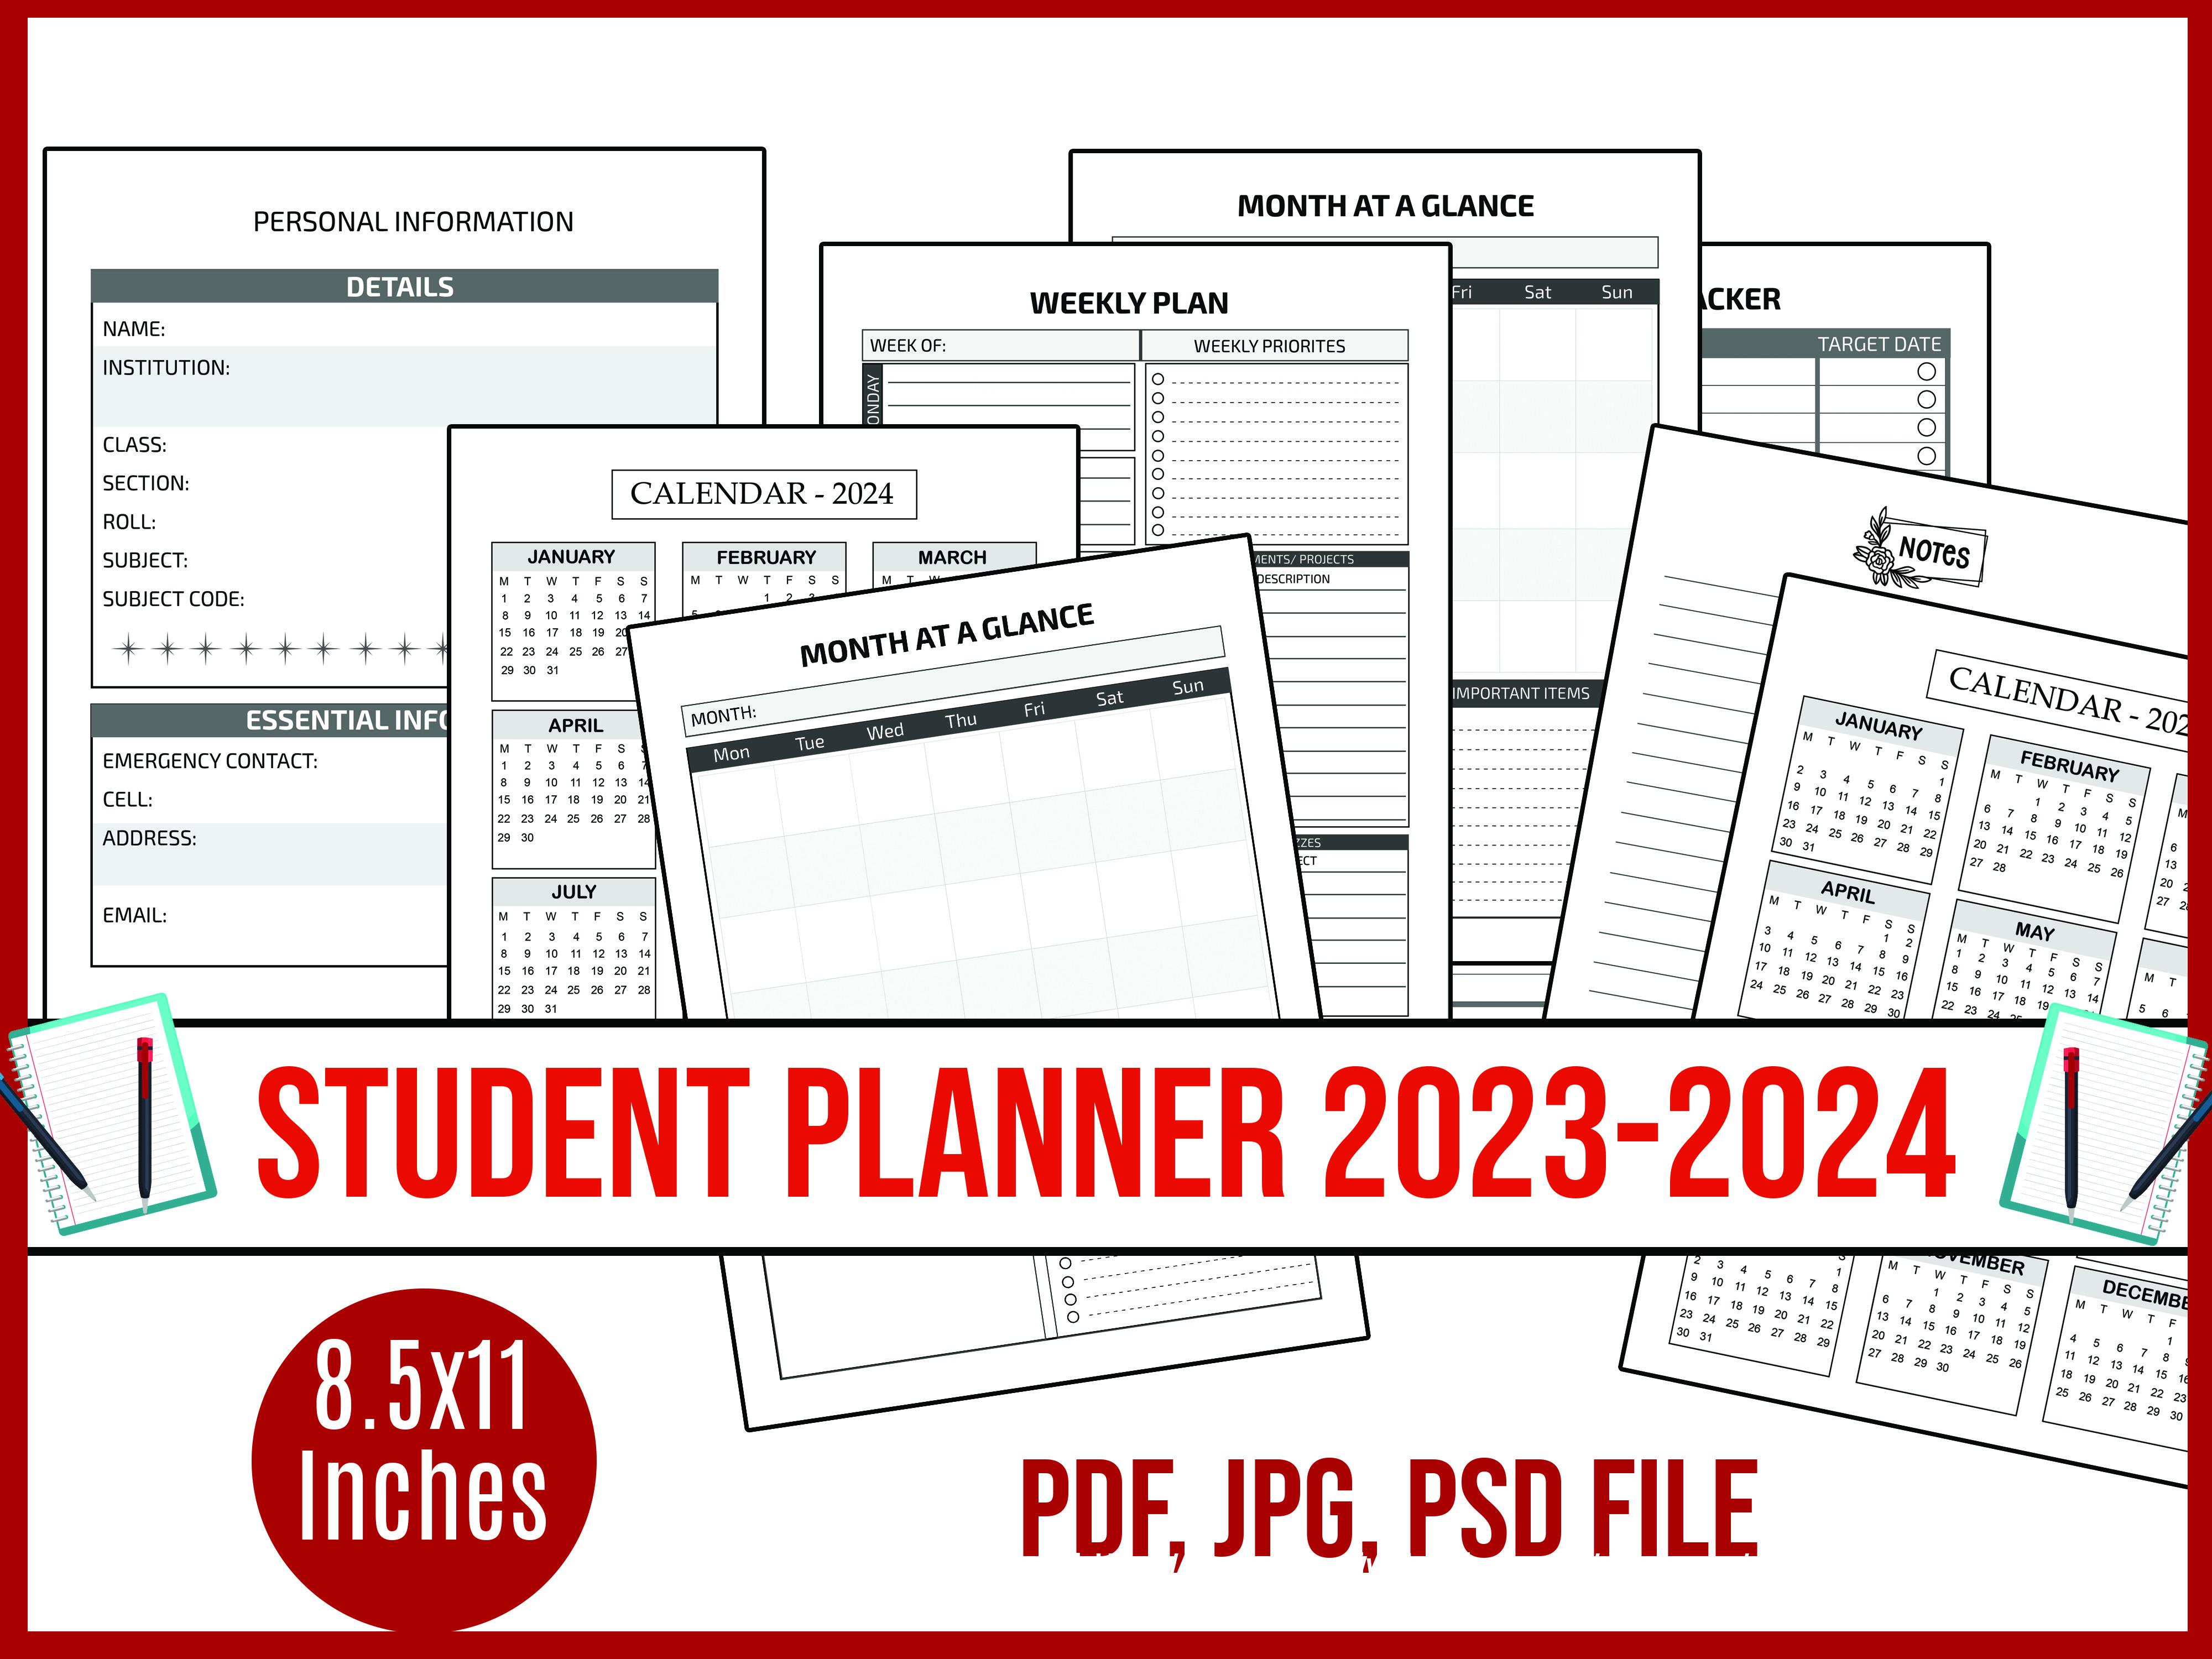 Student Planner 2023-2024, Study Planner